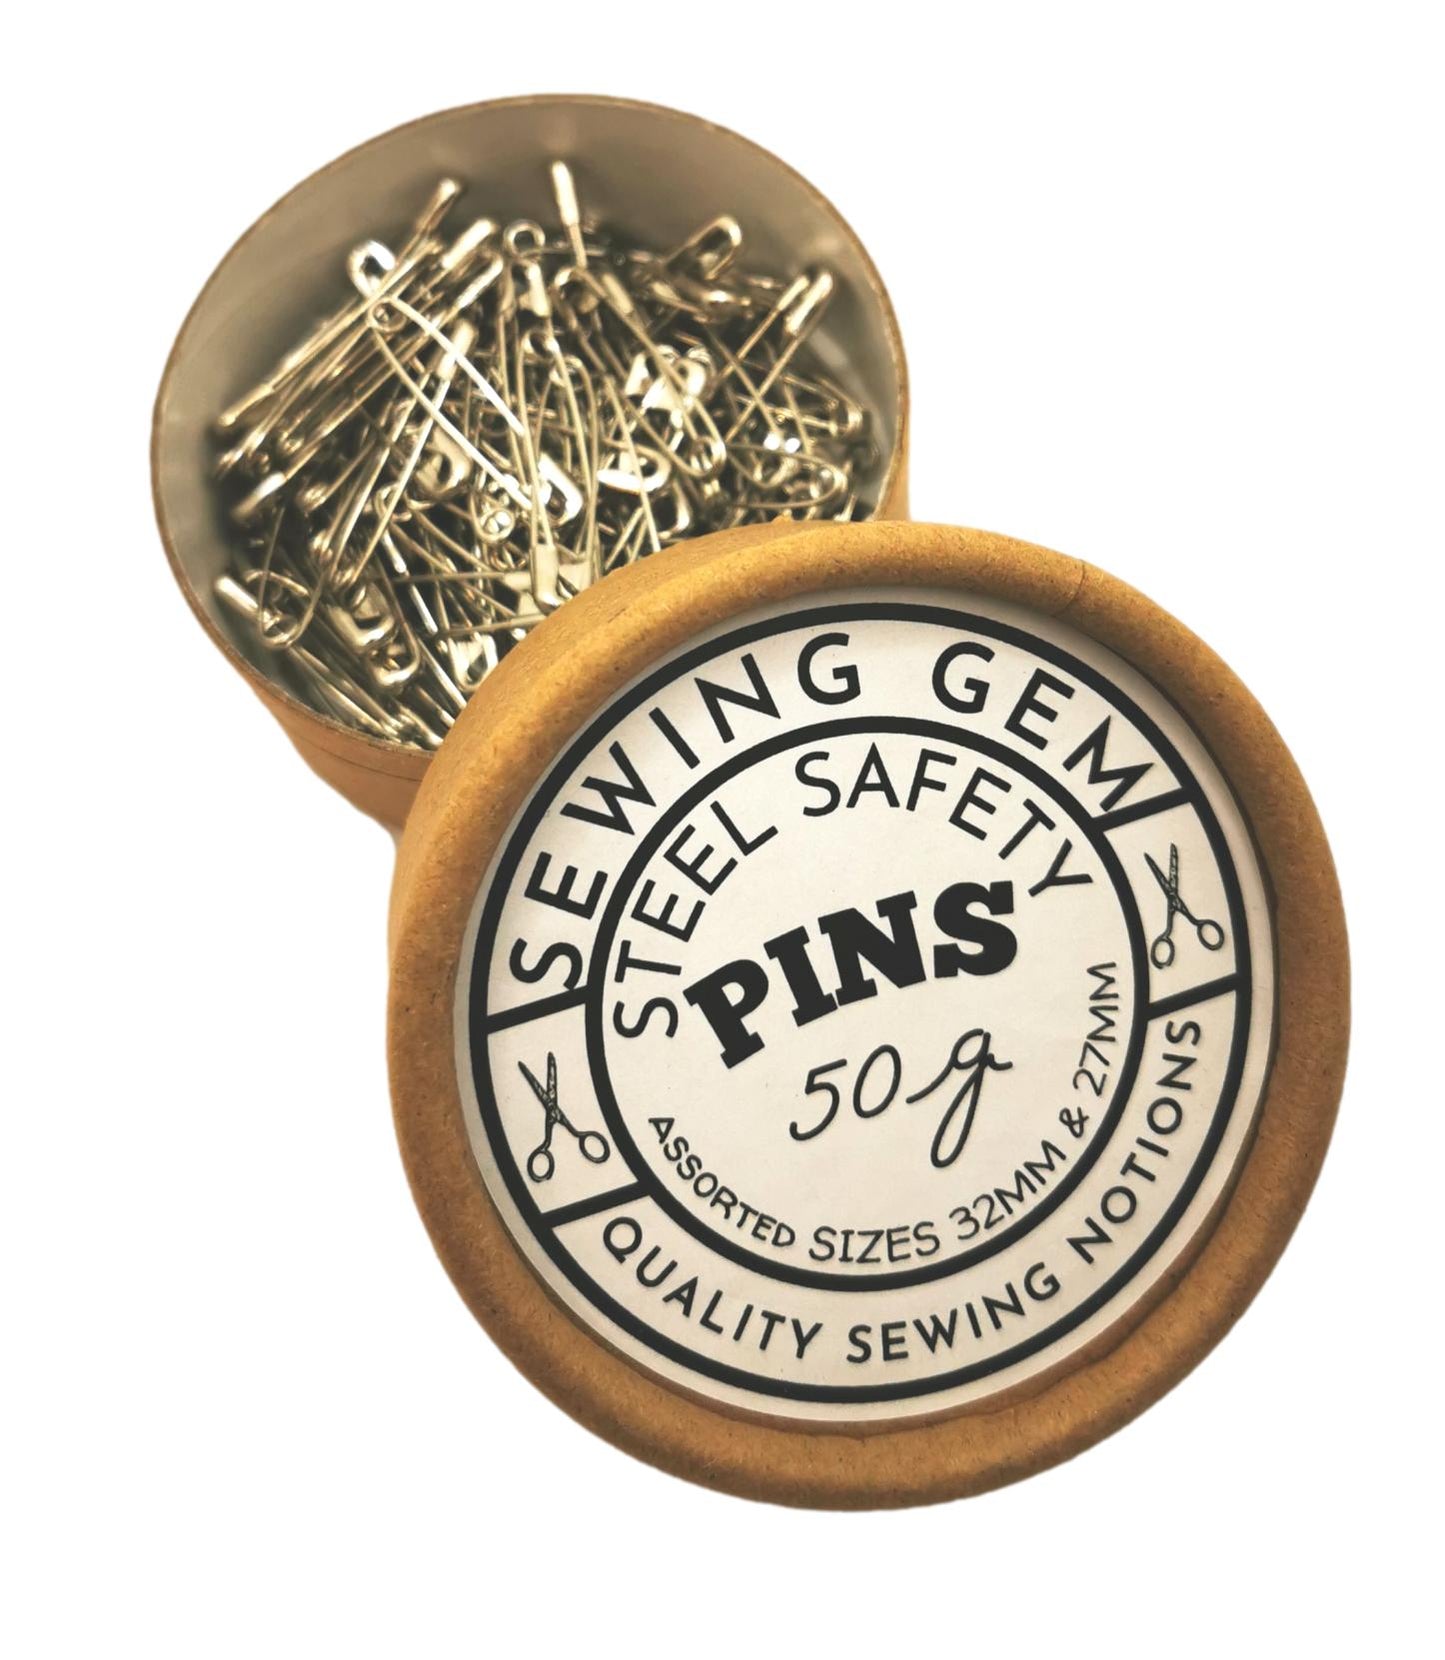 Sewing Gem - Safety Pins - 50g